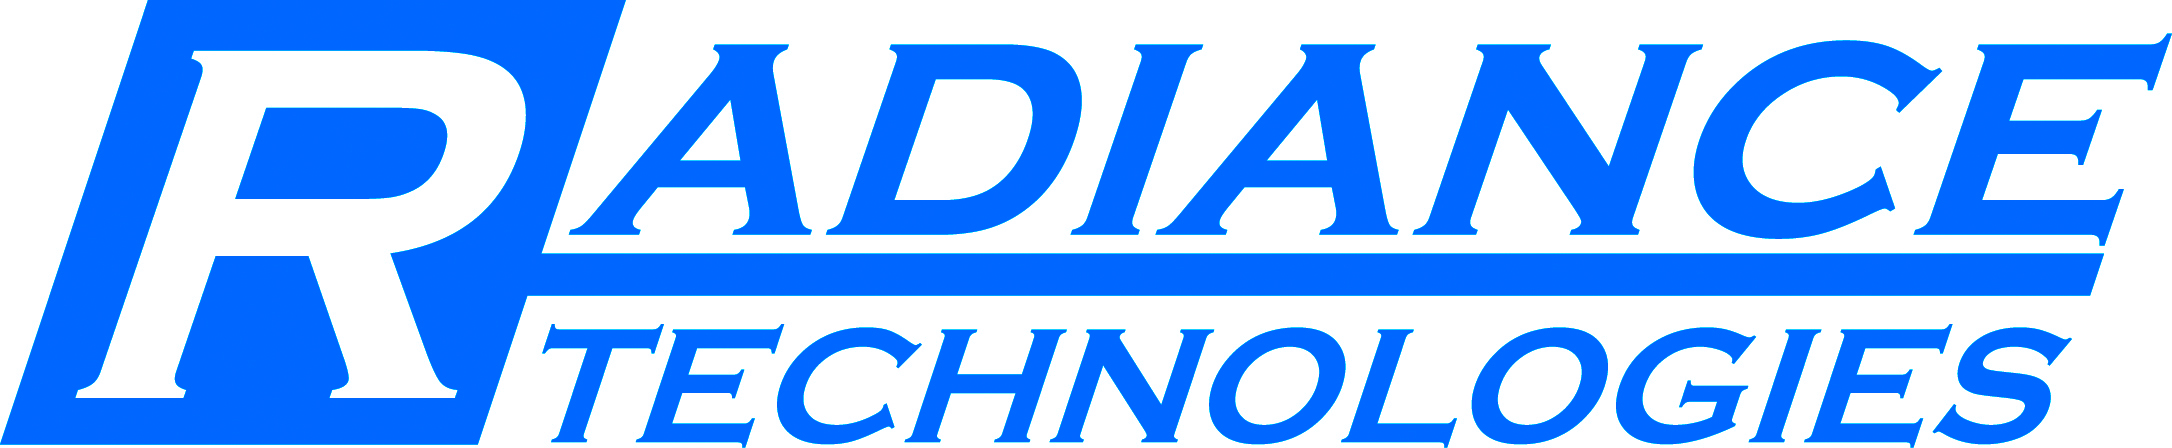 Radiance Technologies logo